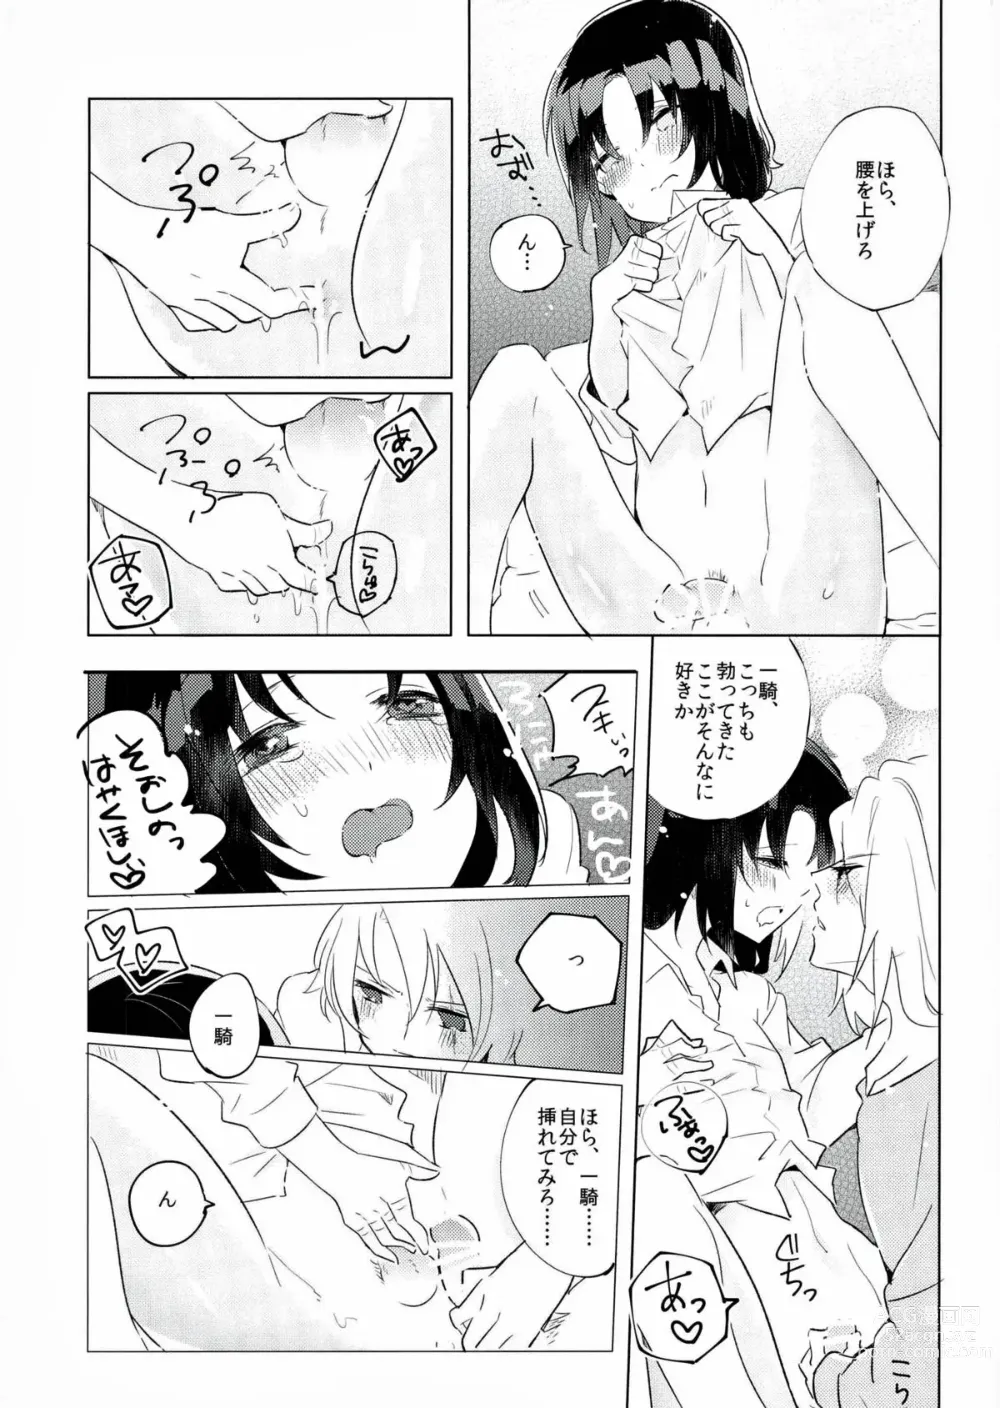 Page 12 of doujinshi Good night and morning call